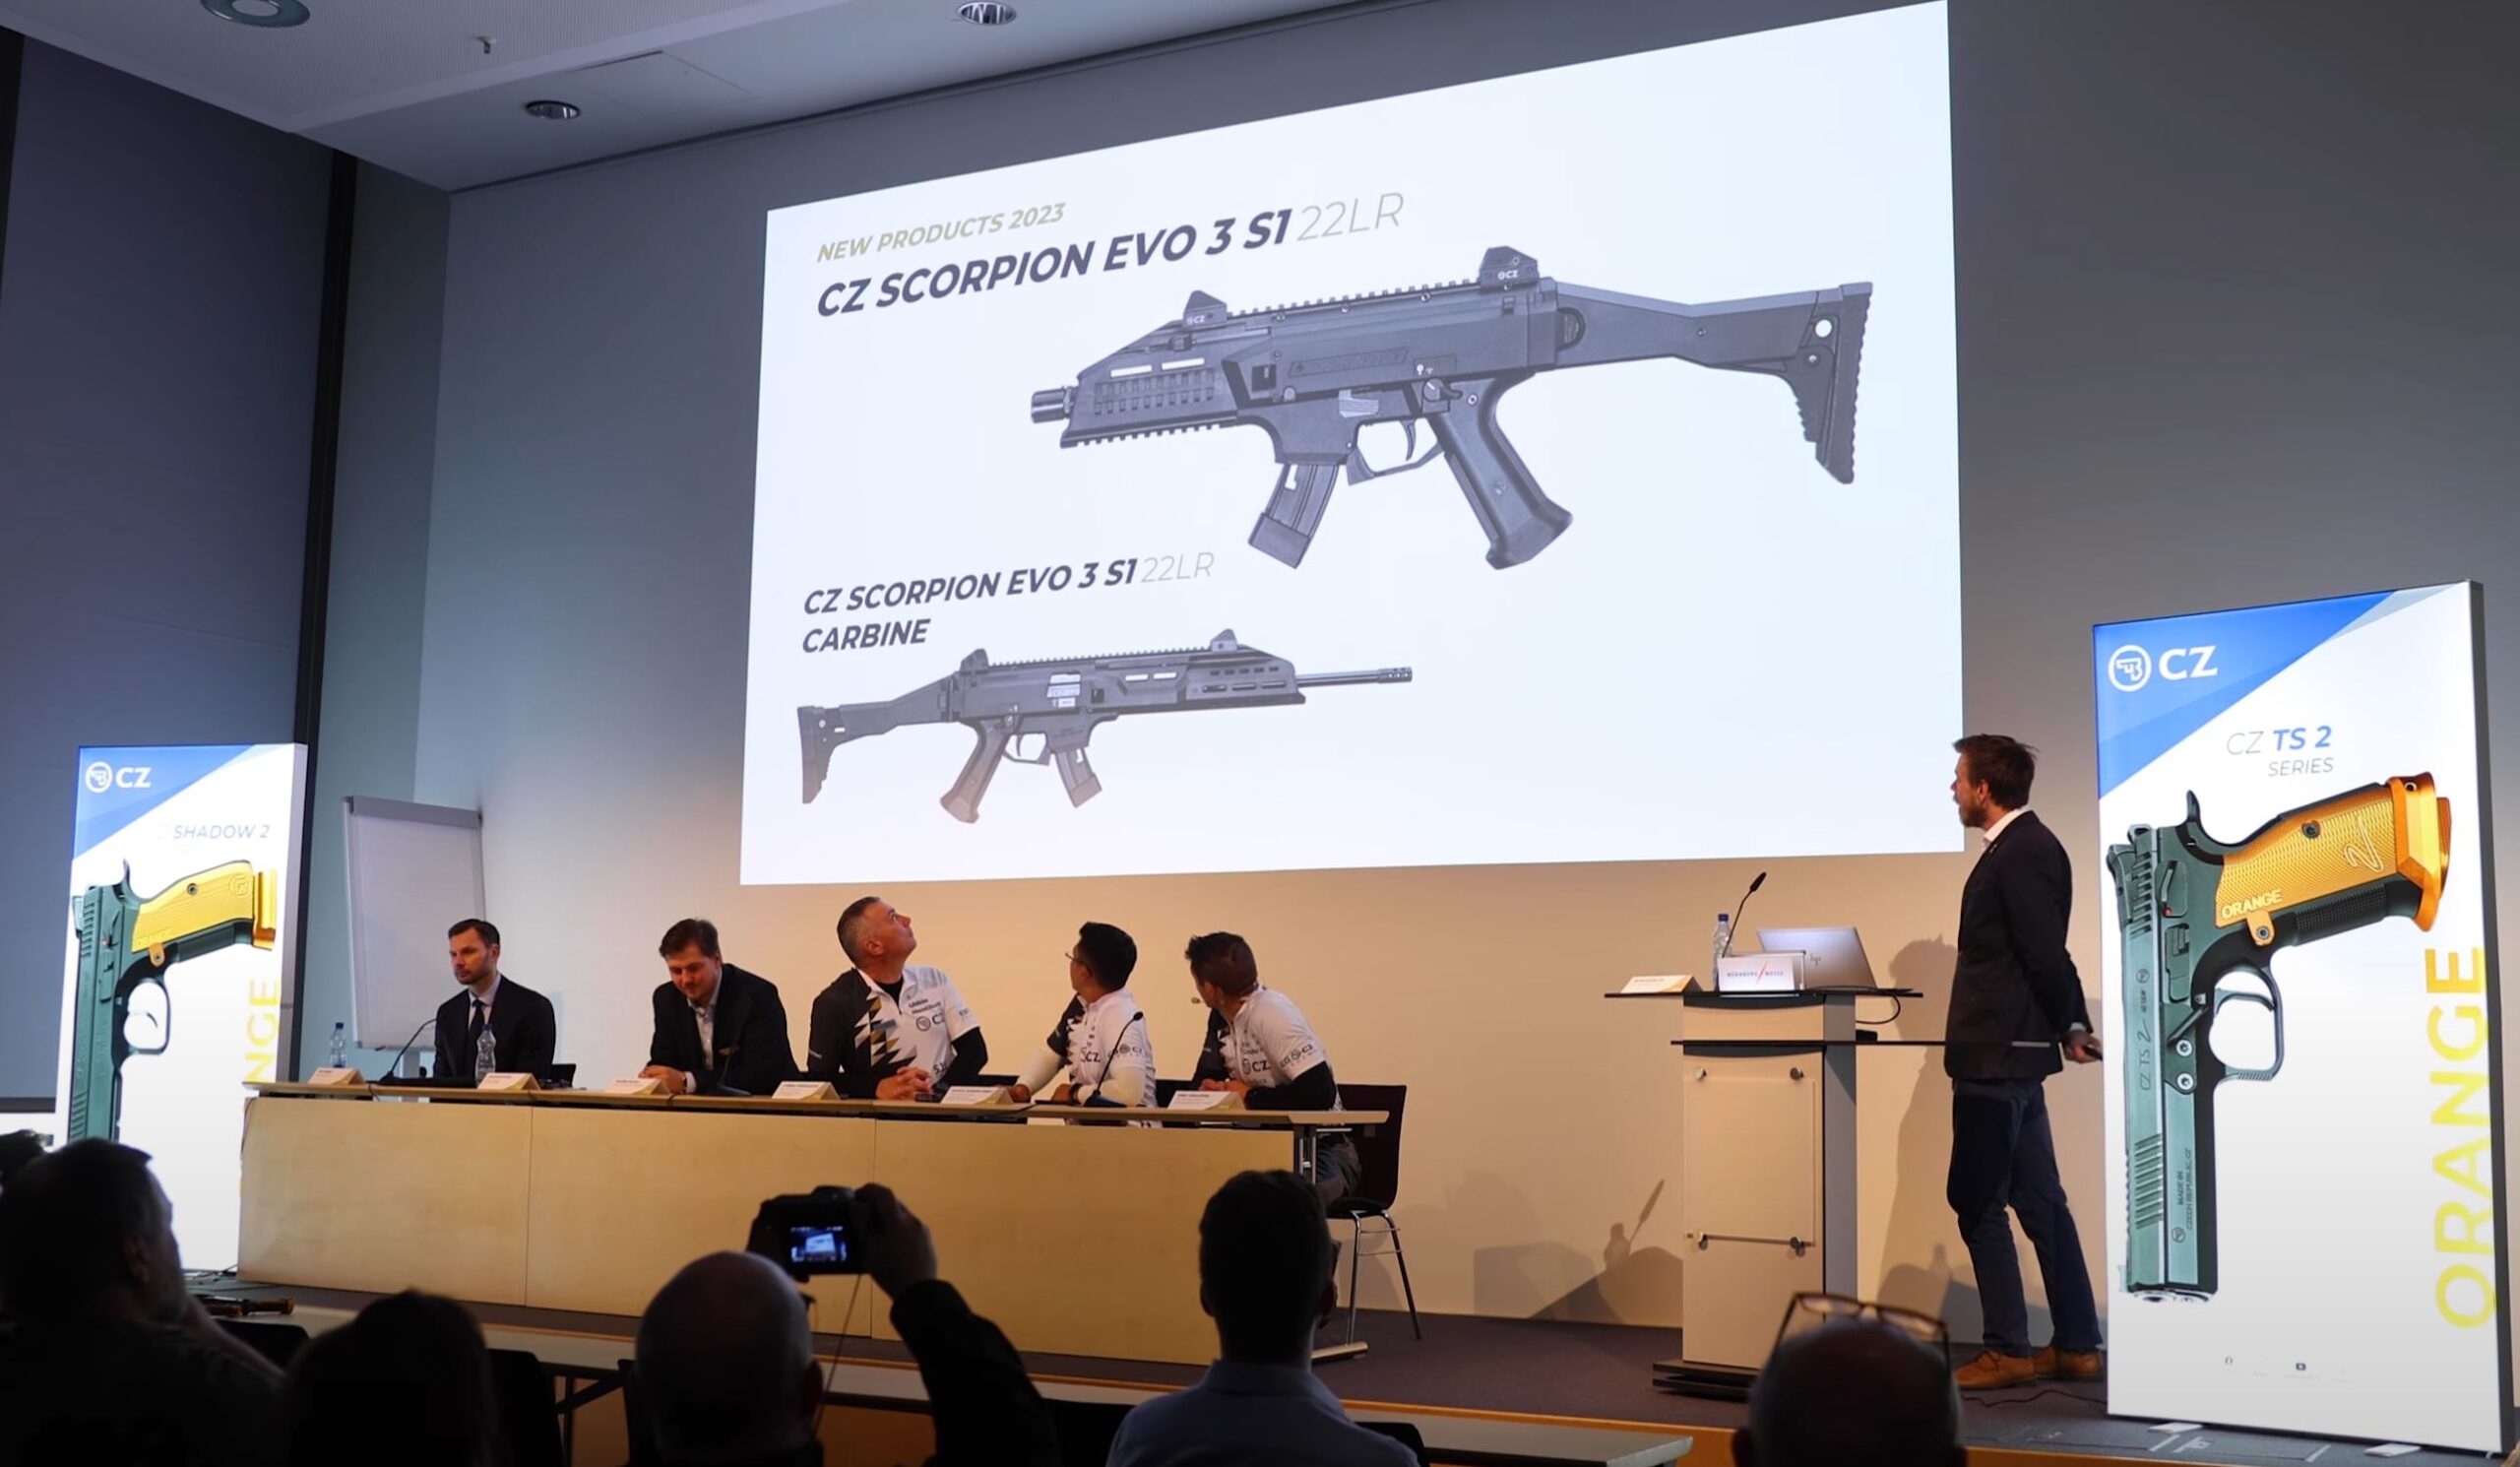 Meet CZ's New 22LR Rimfire Scorpion EVO 3 S1 and S1 Carbine